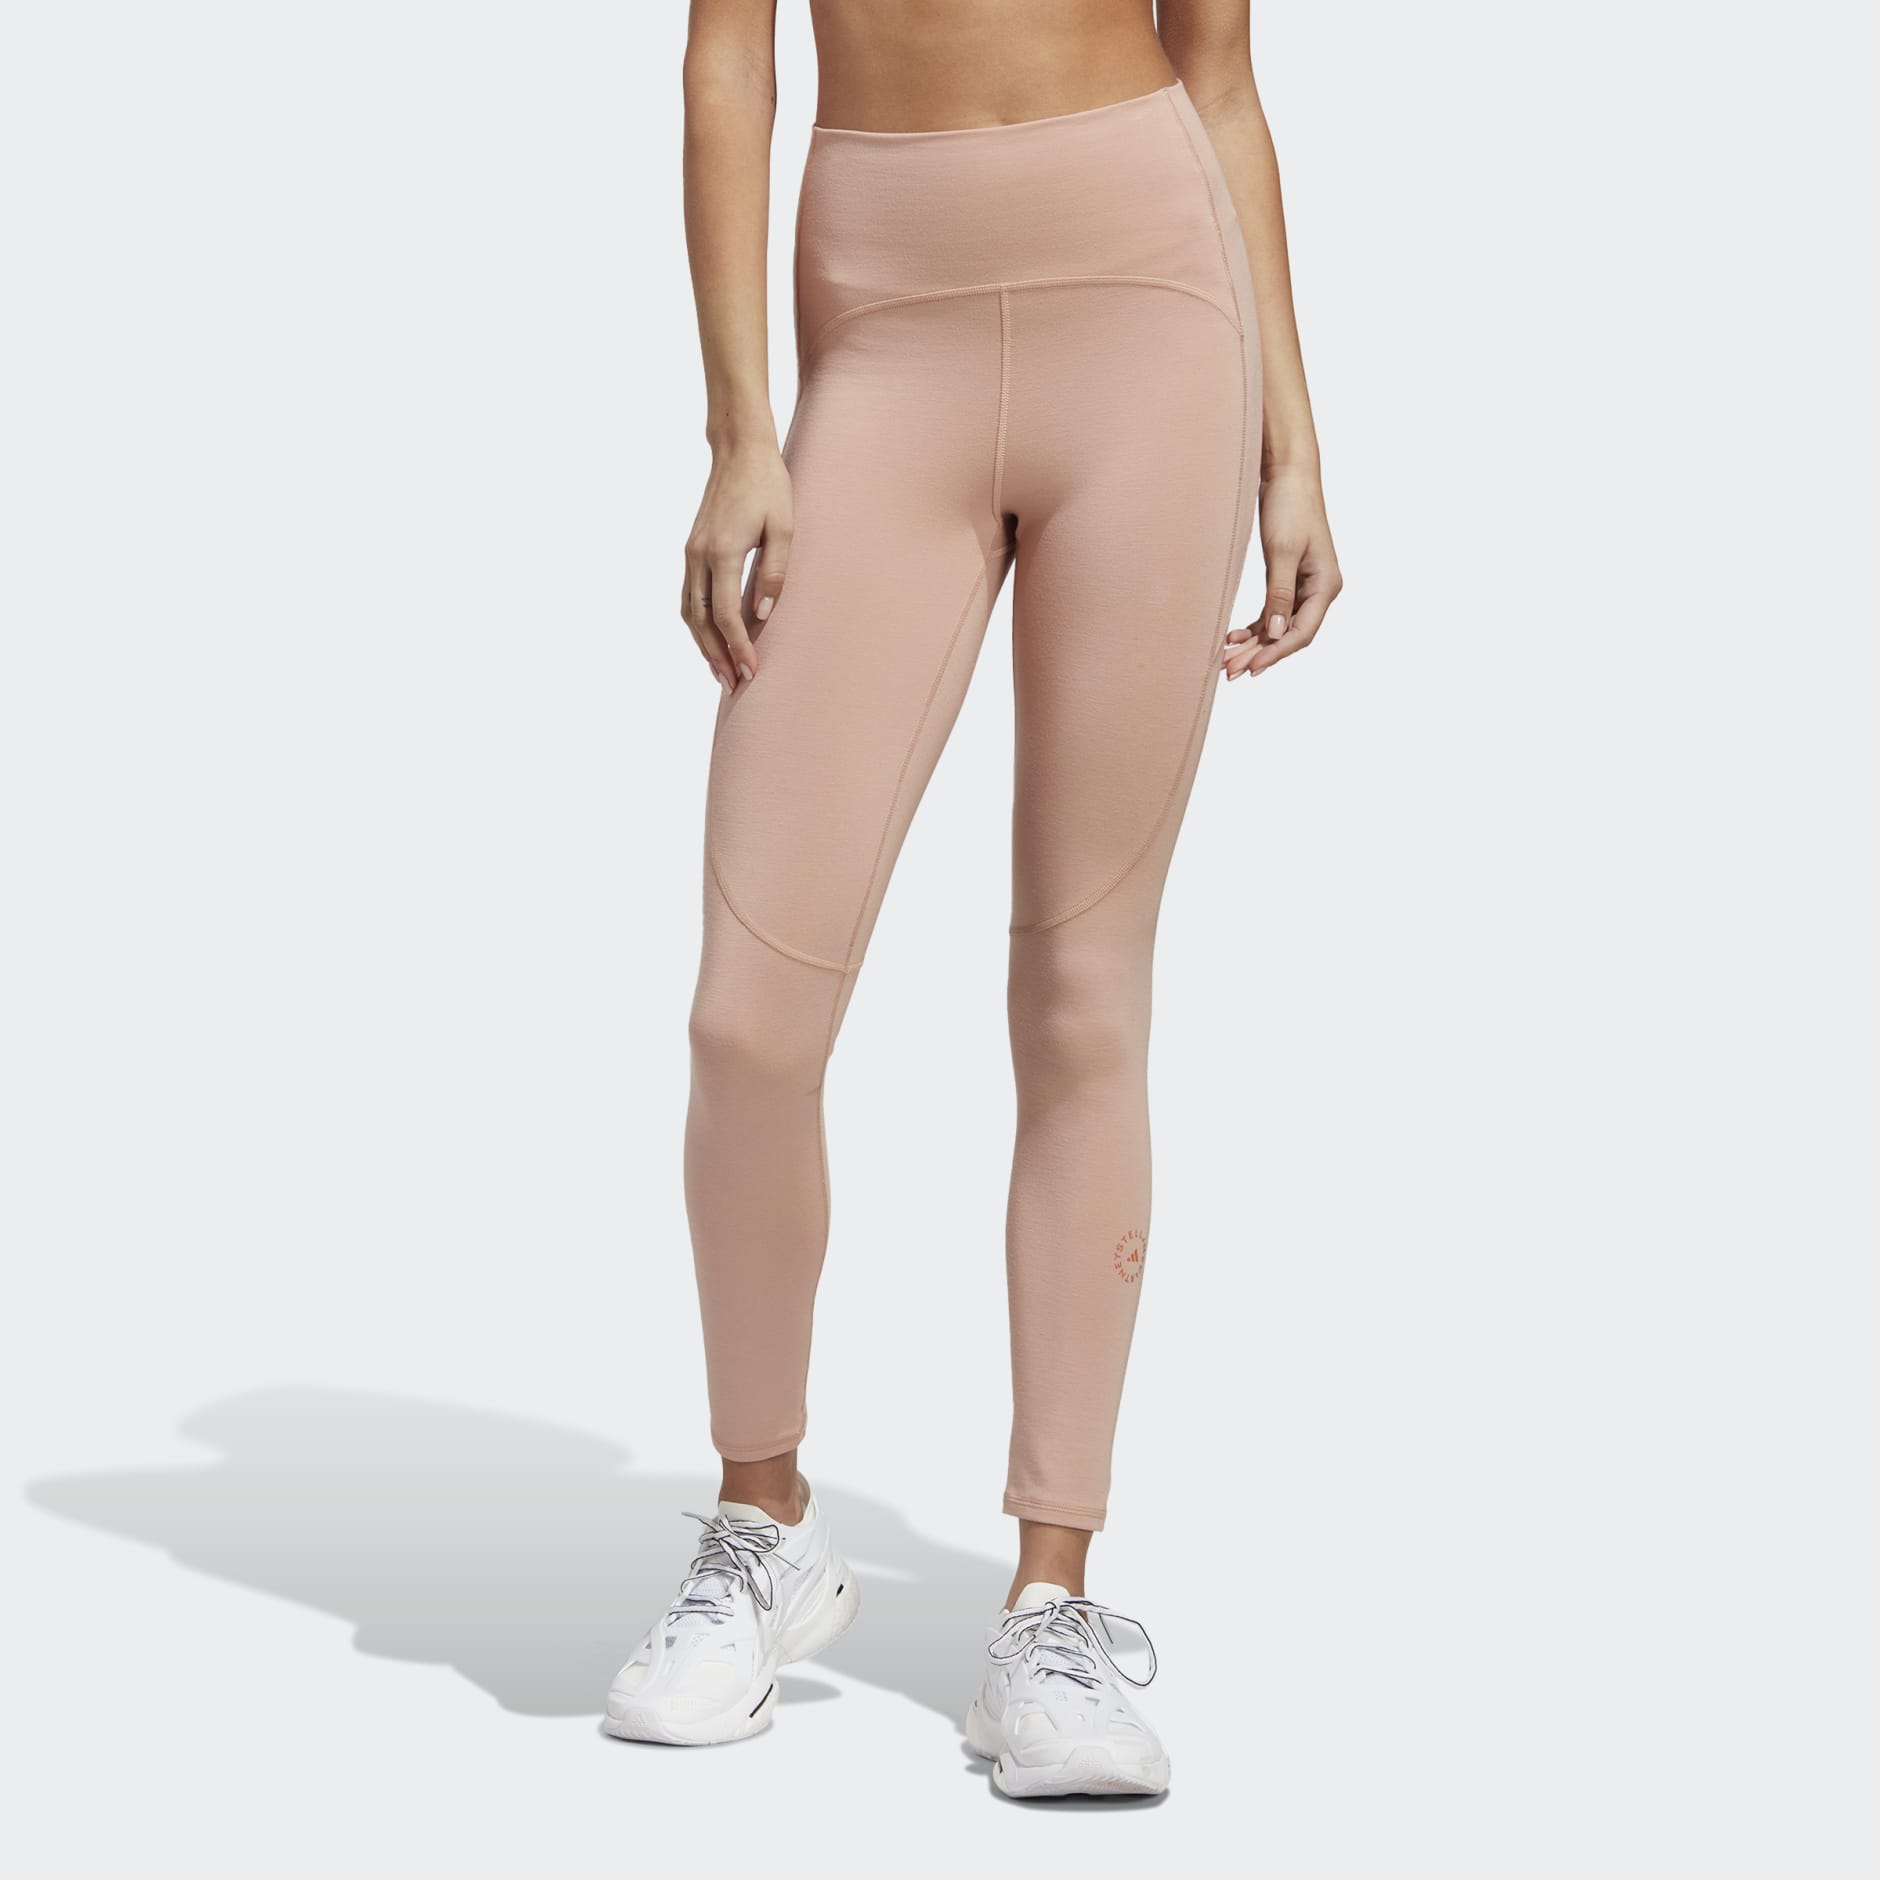 Women's Clothing - adidas by Stella McCartney 7/8 Yoga Leggings - Brown